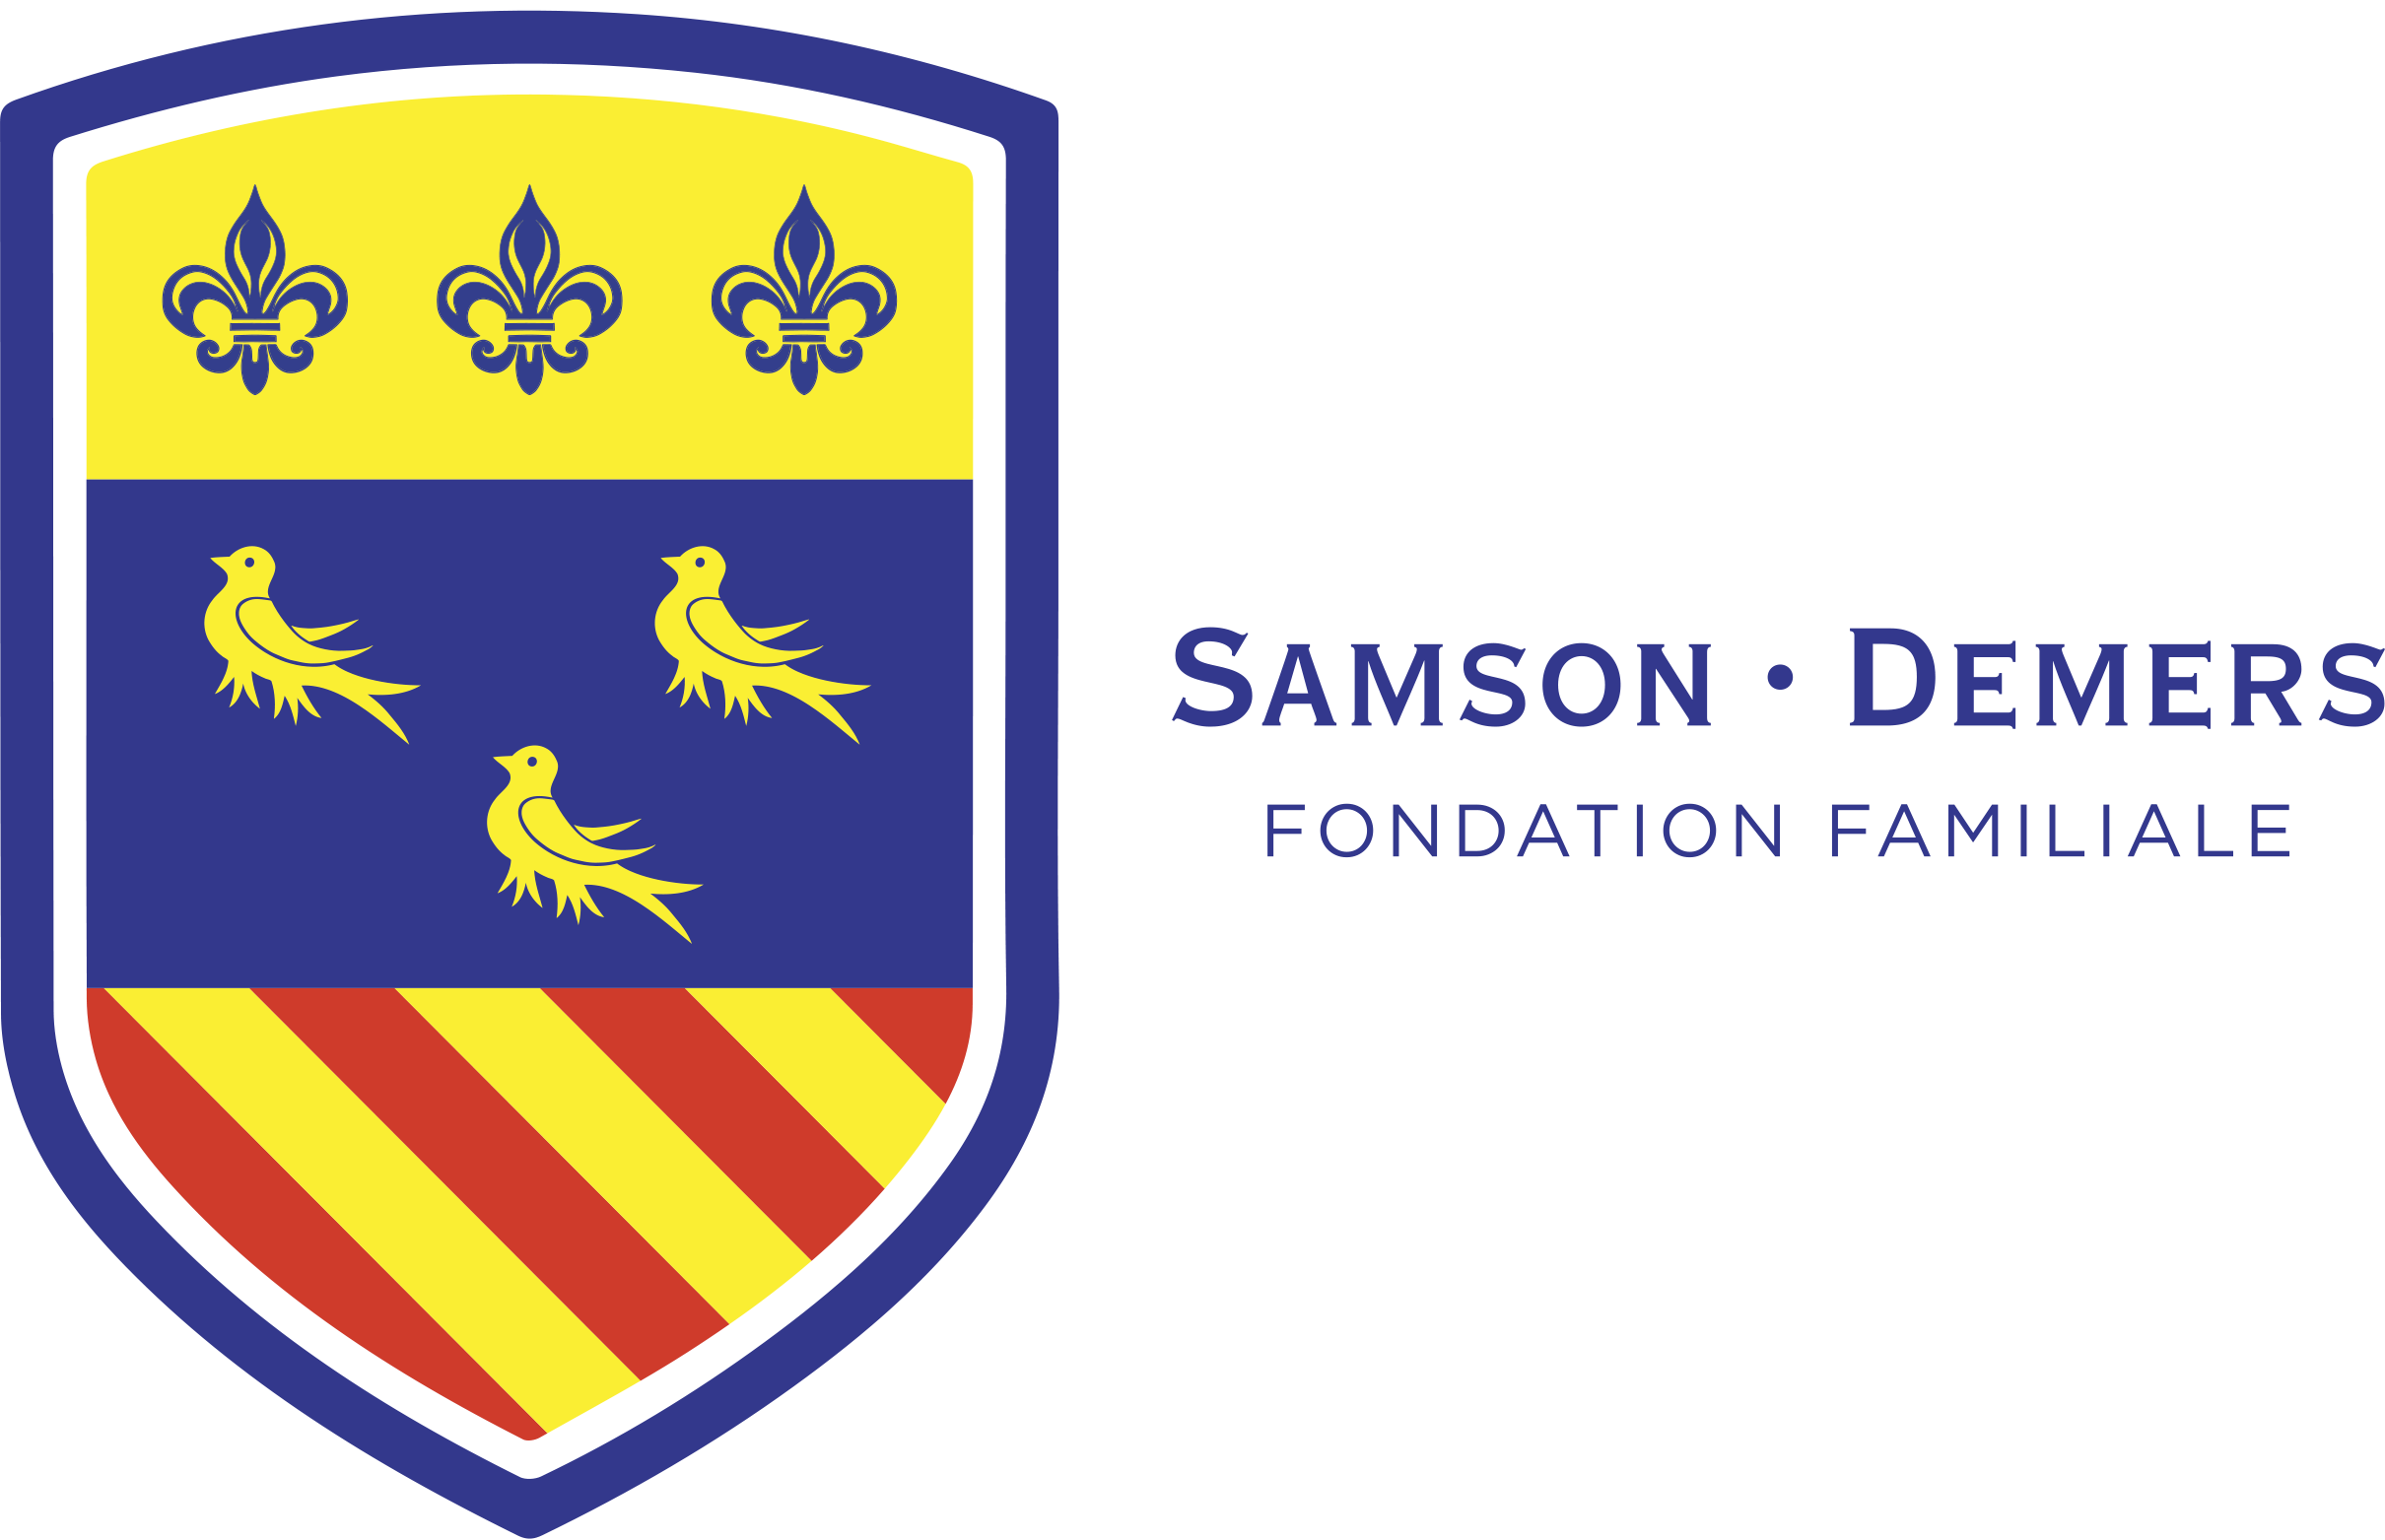 Bourses Fondation Famille Samson